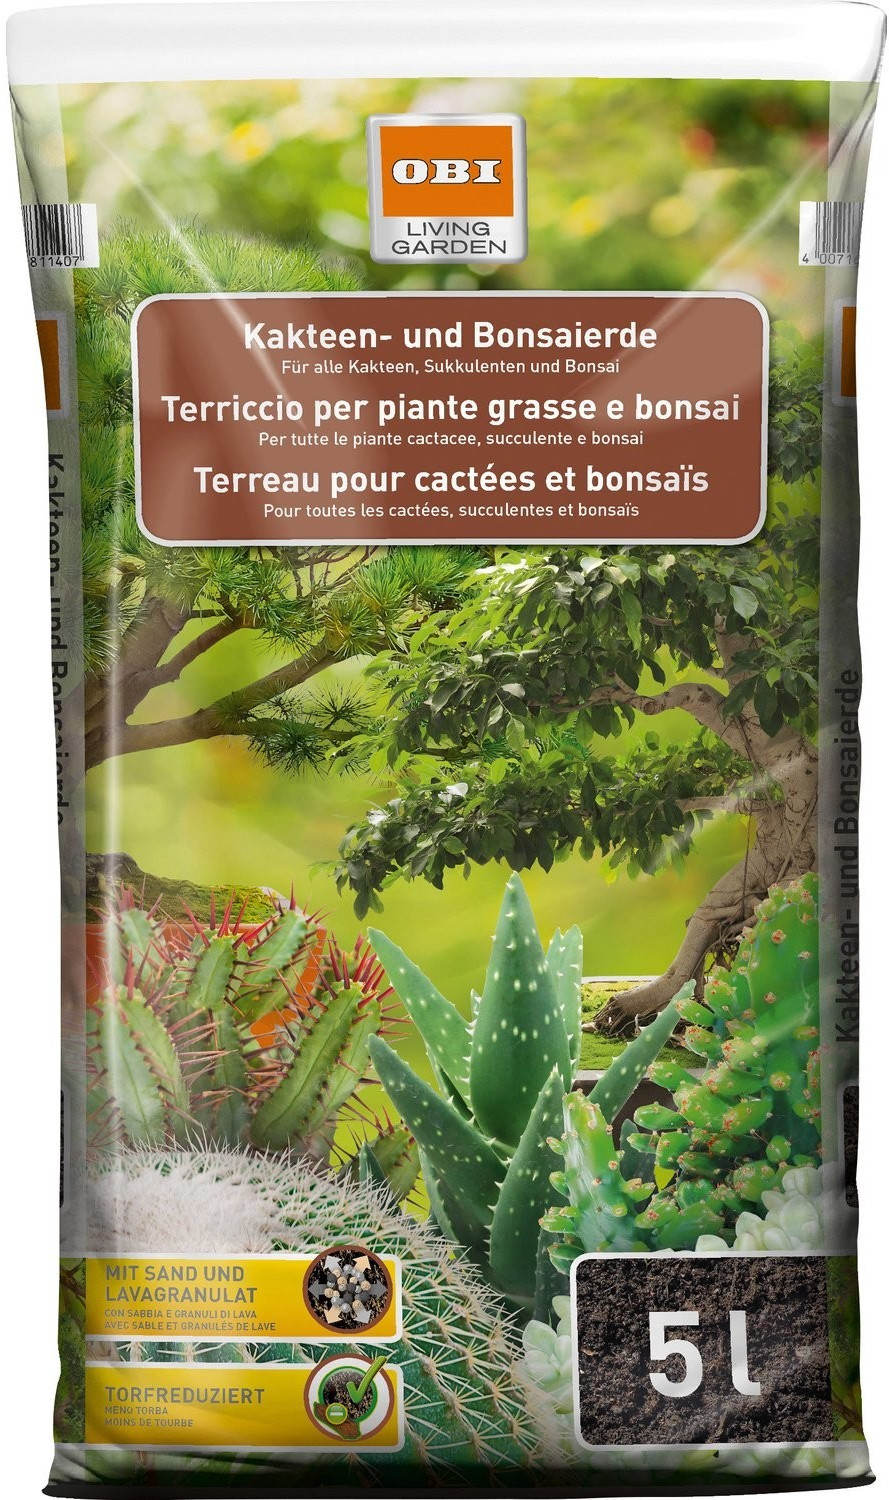 Obi Living Garden Kakteen- und Bonsaierde 5 Liter